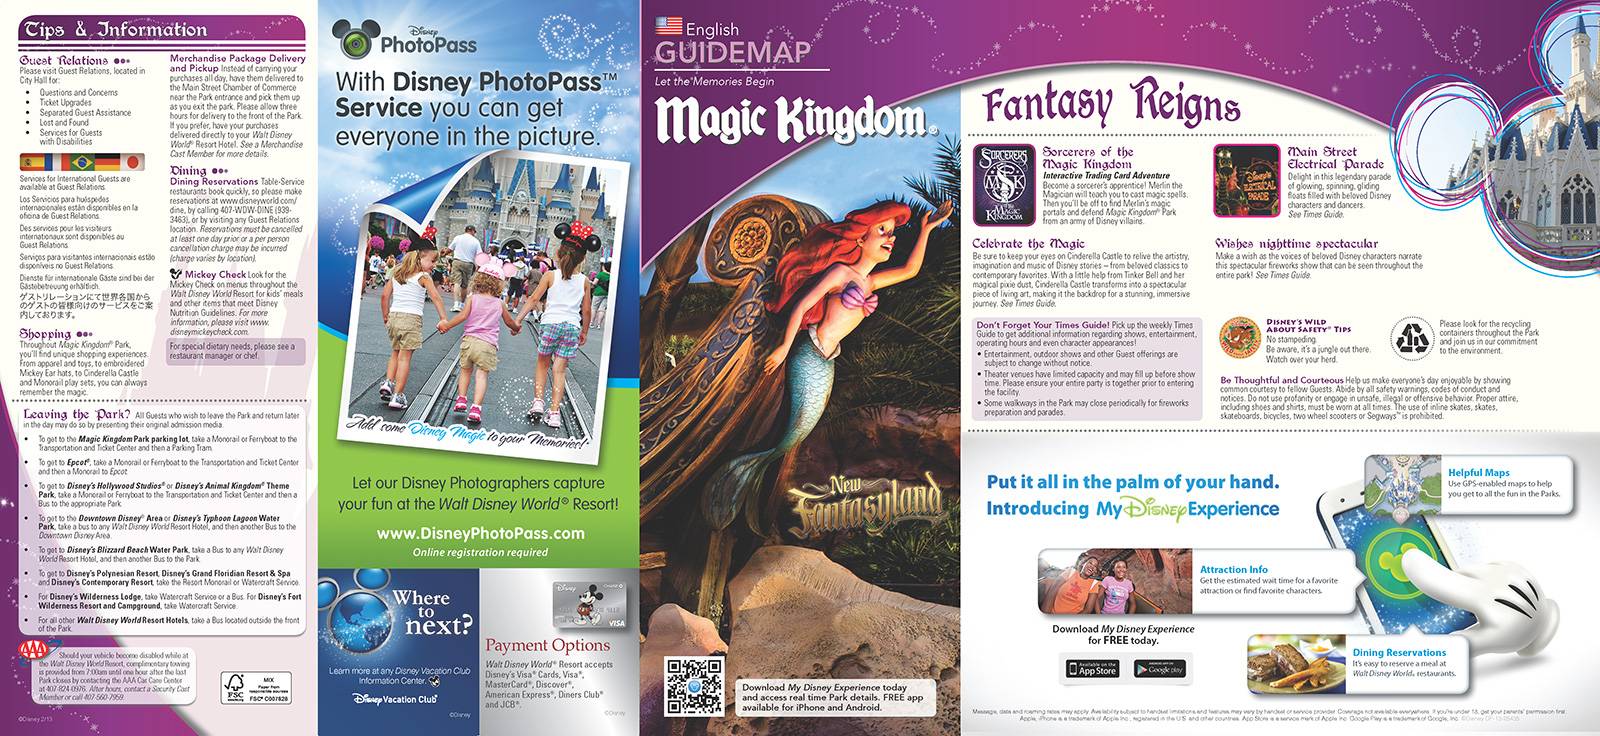 New 2013 Magic Kingdom Guidemap Page 1